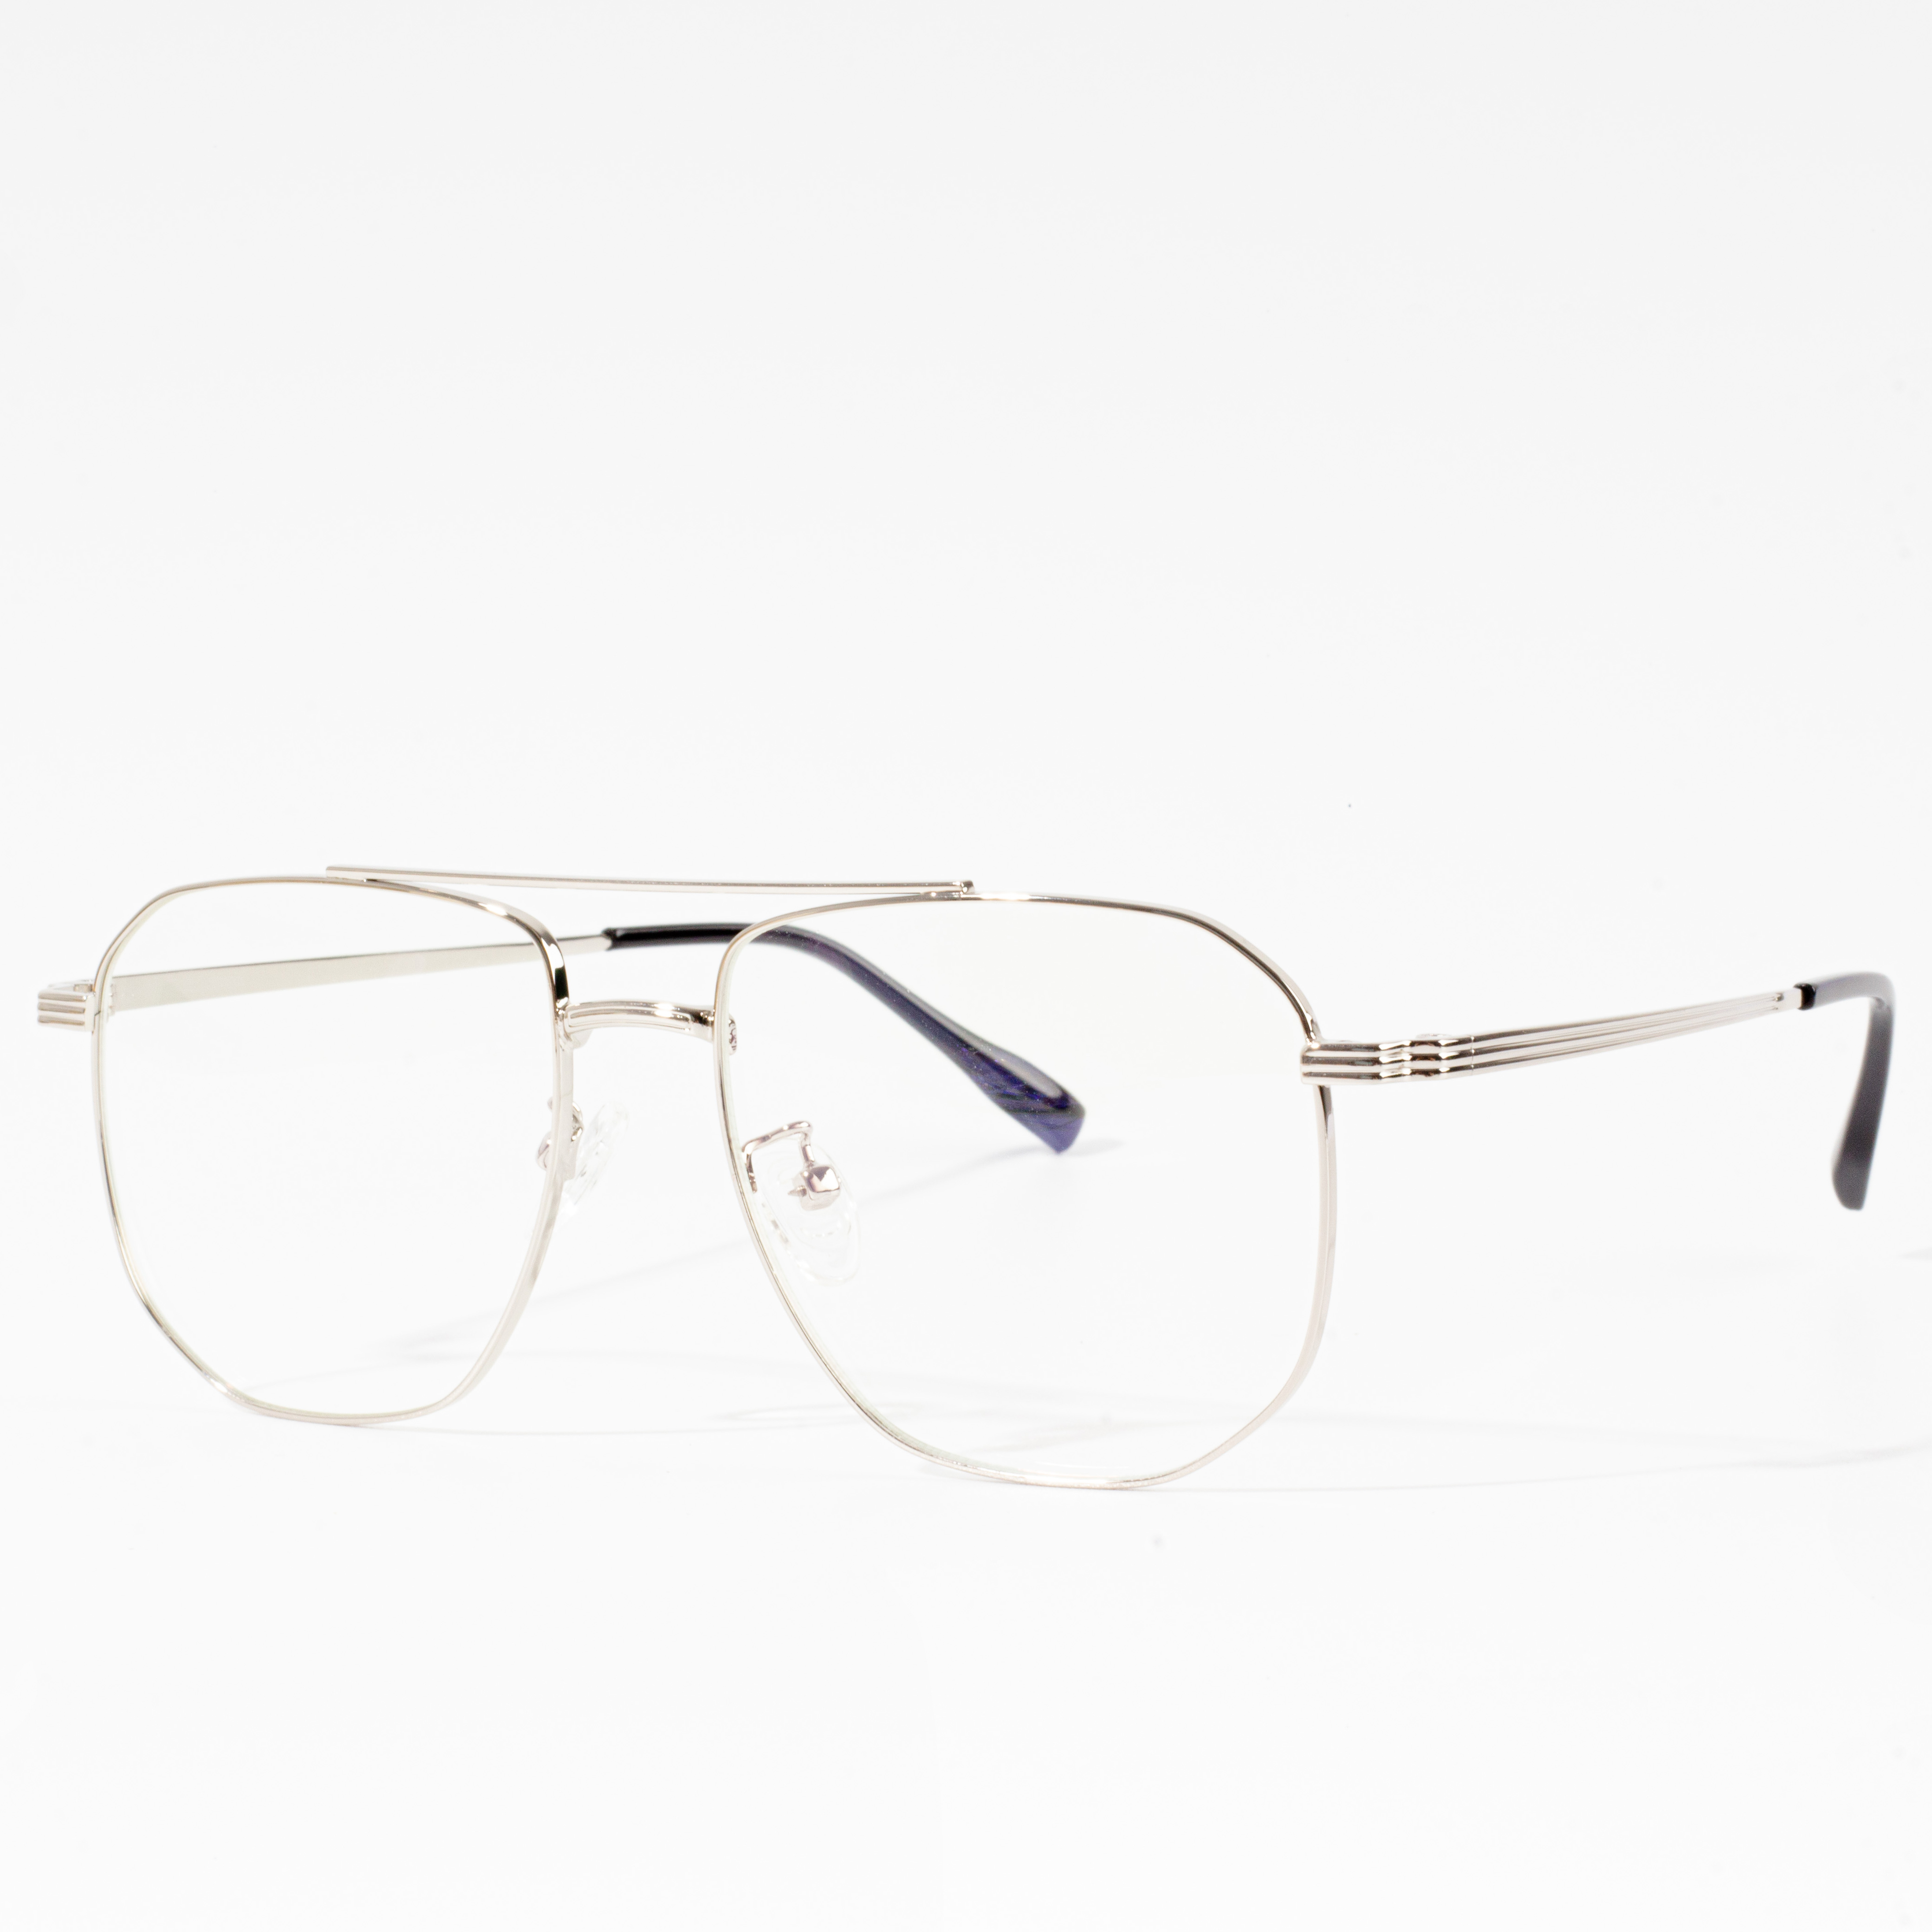 target eyeglass frames